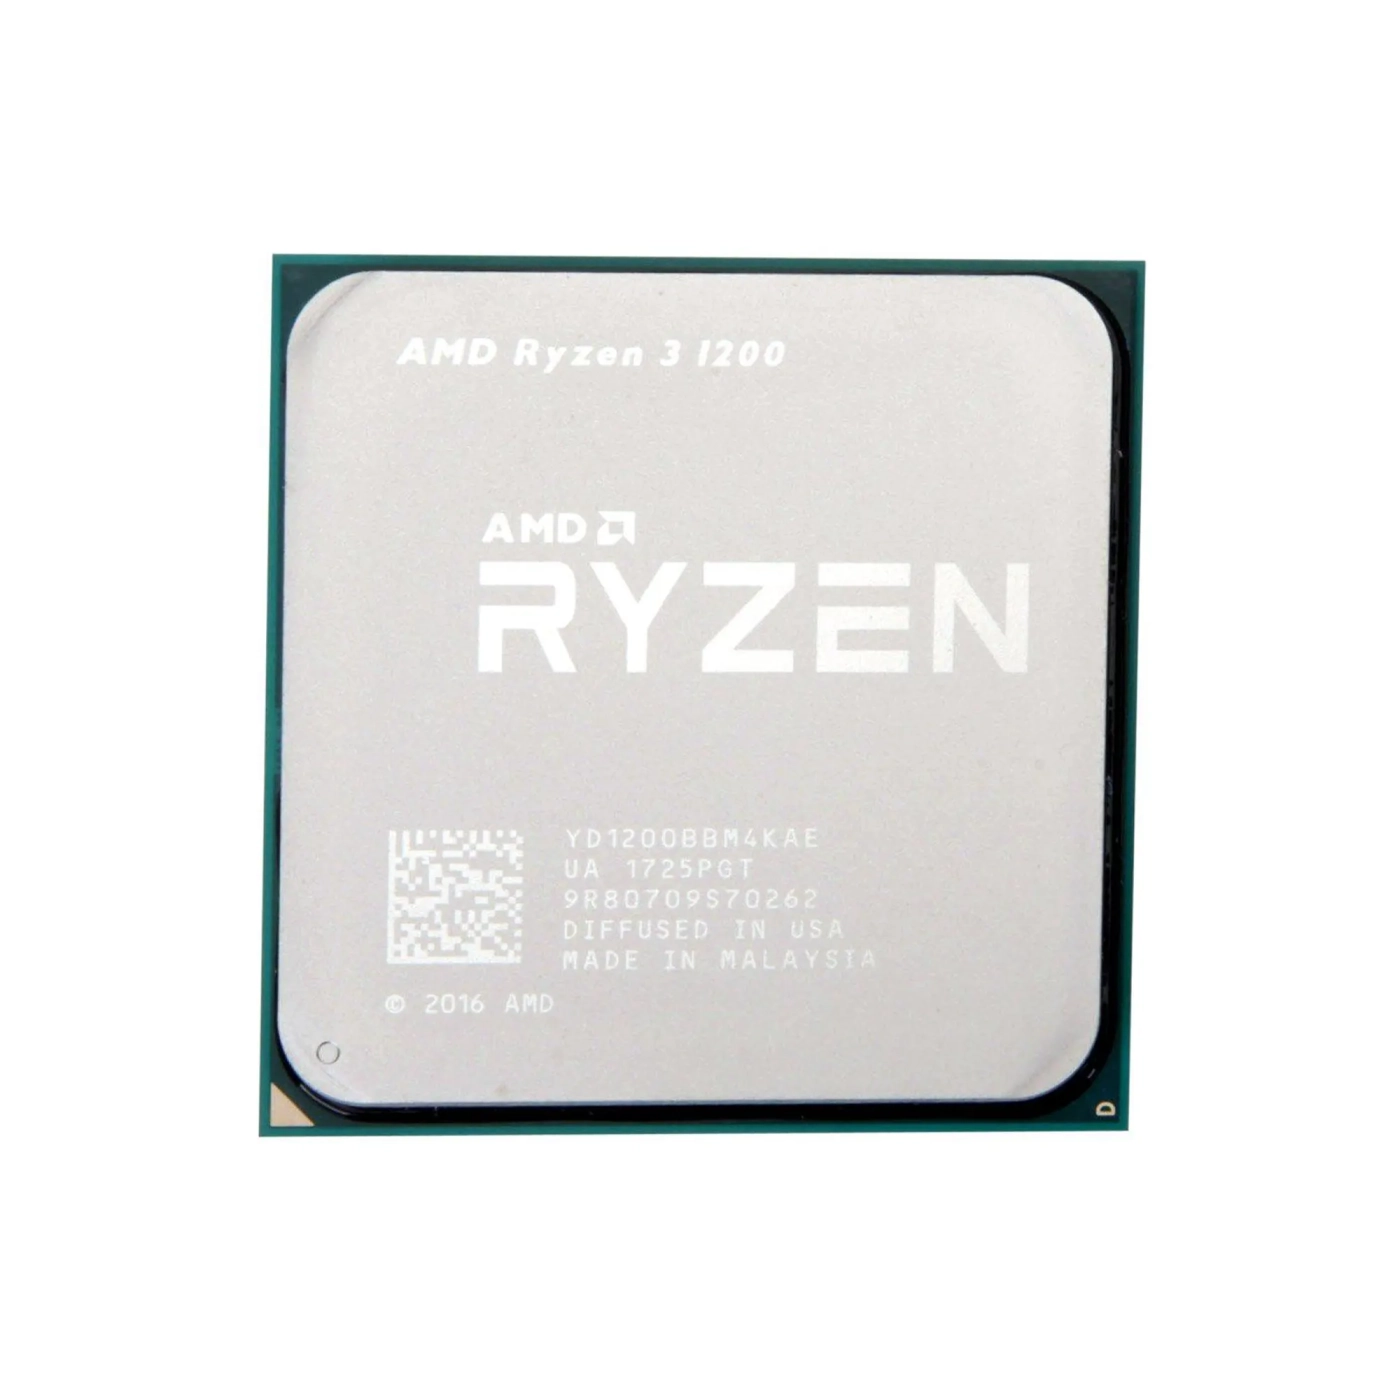 Купити Процесор AMD Ryzen 3 1200 4C/4T (3.1/3.4GHz Boost 10MB 65W AM4) tray - фото 1